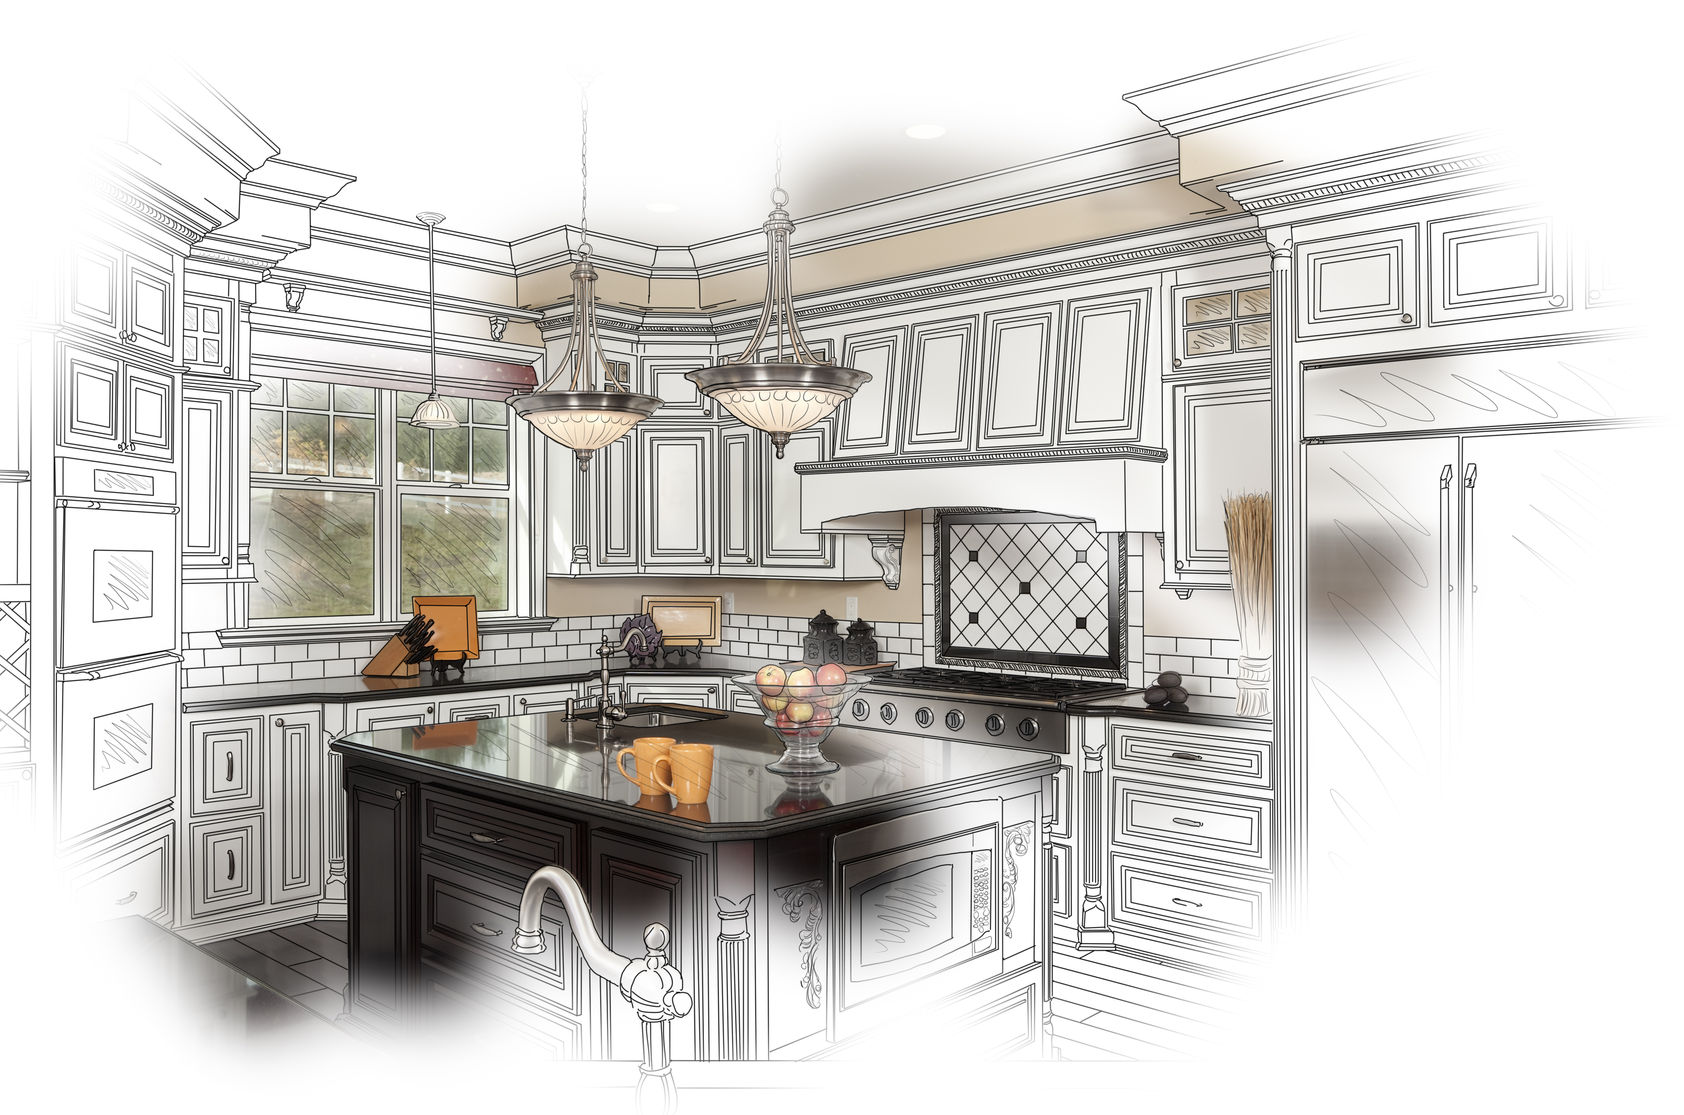 36674331 - beautiful custom kitchen design drawing and photo combination.